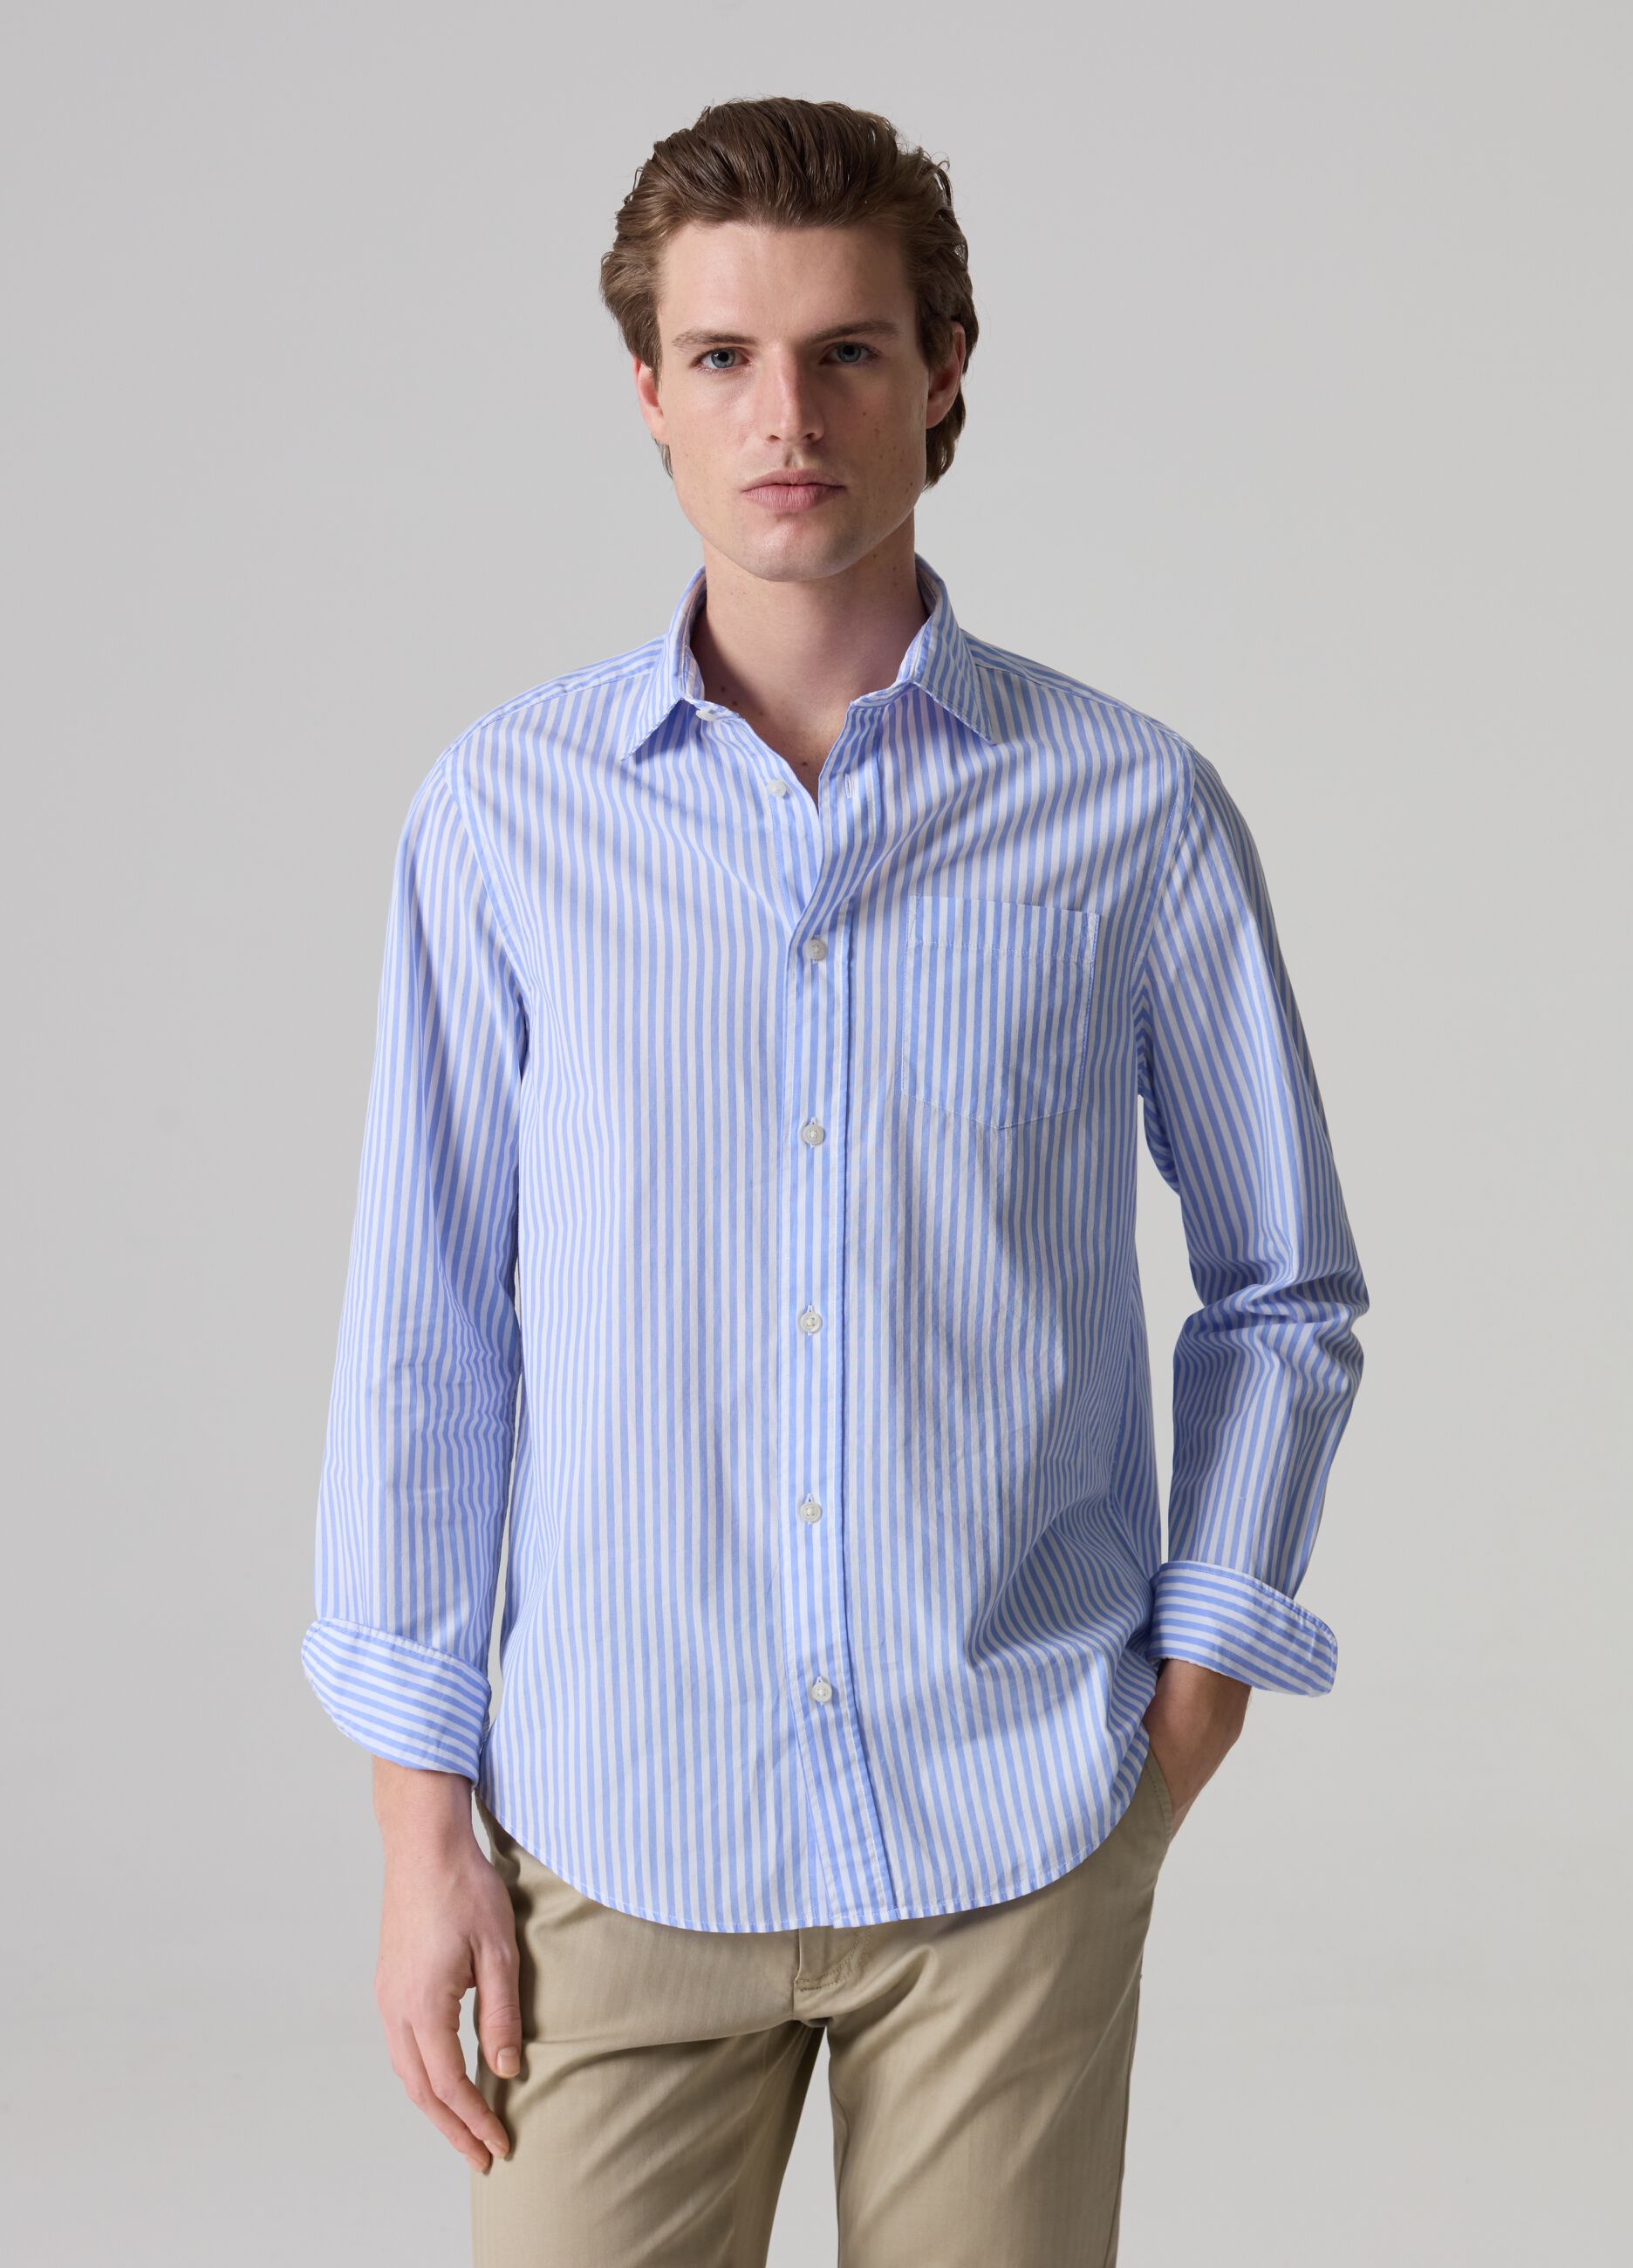 Poplin shirt with striped pattern